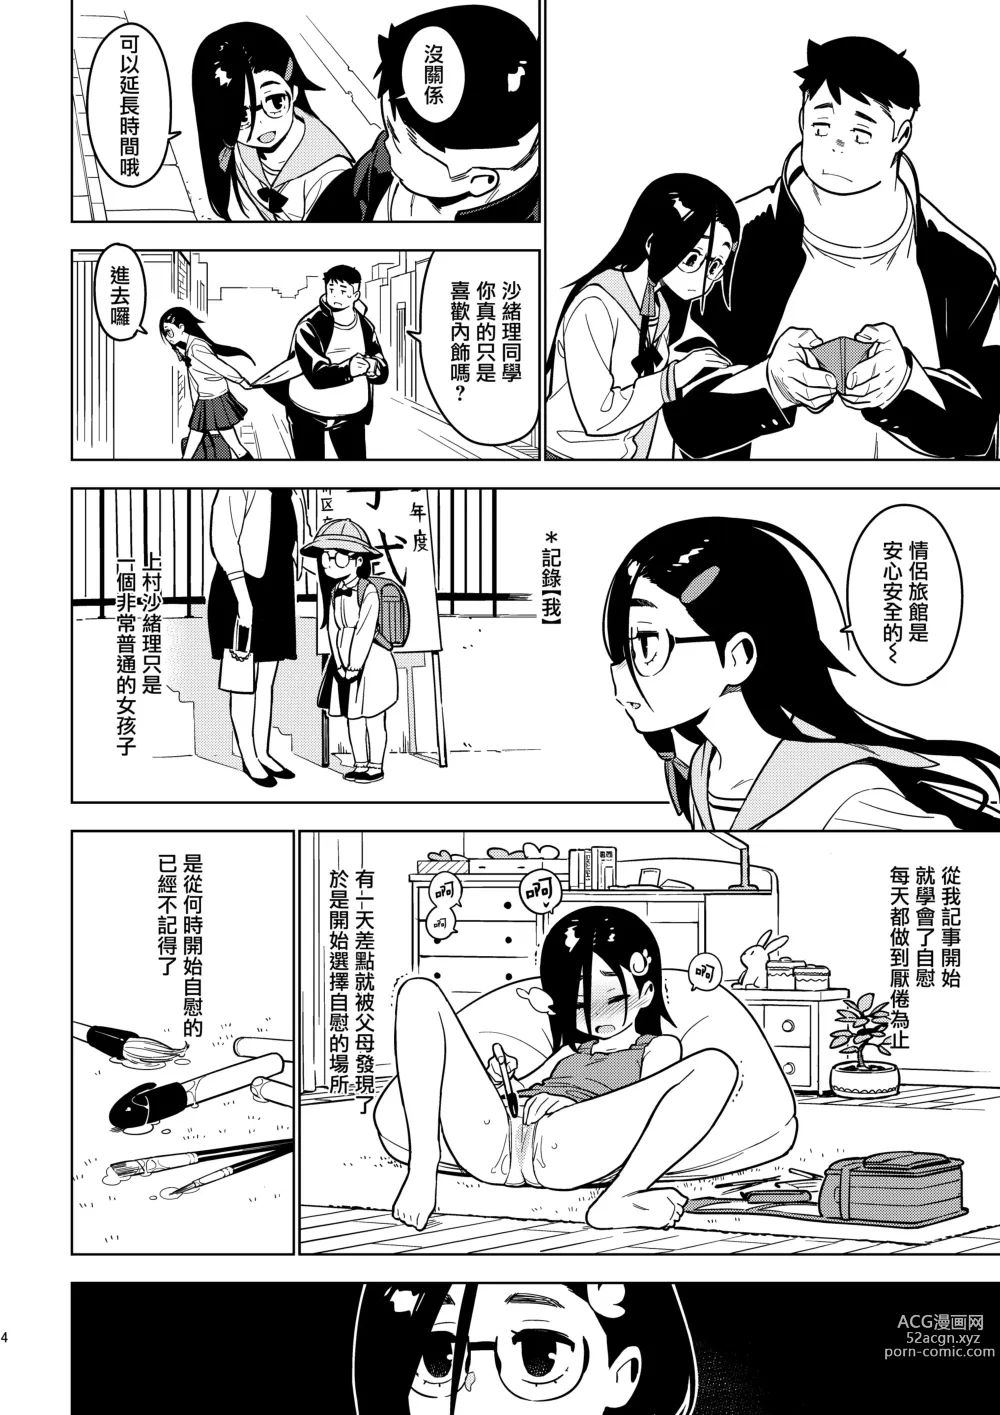 Page 4 of doujinshi Saori